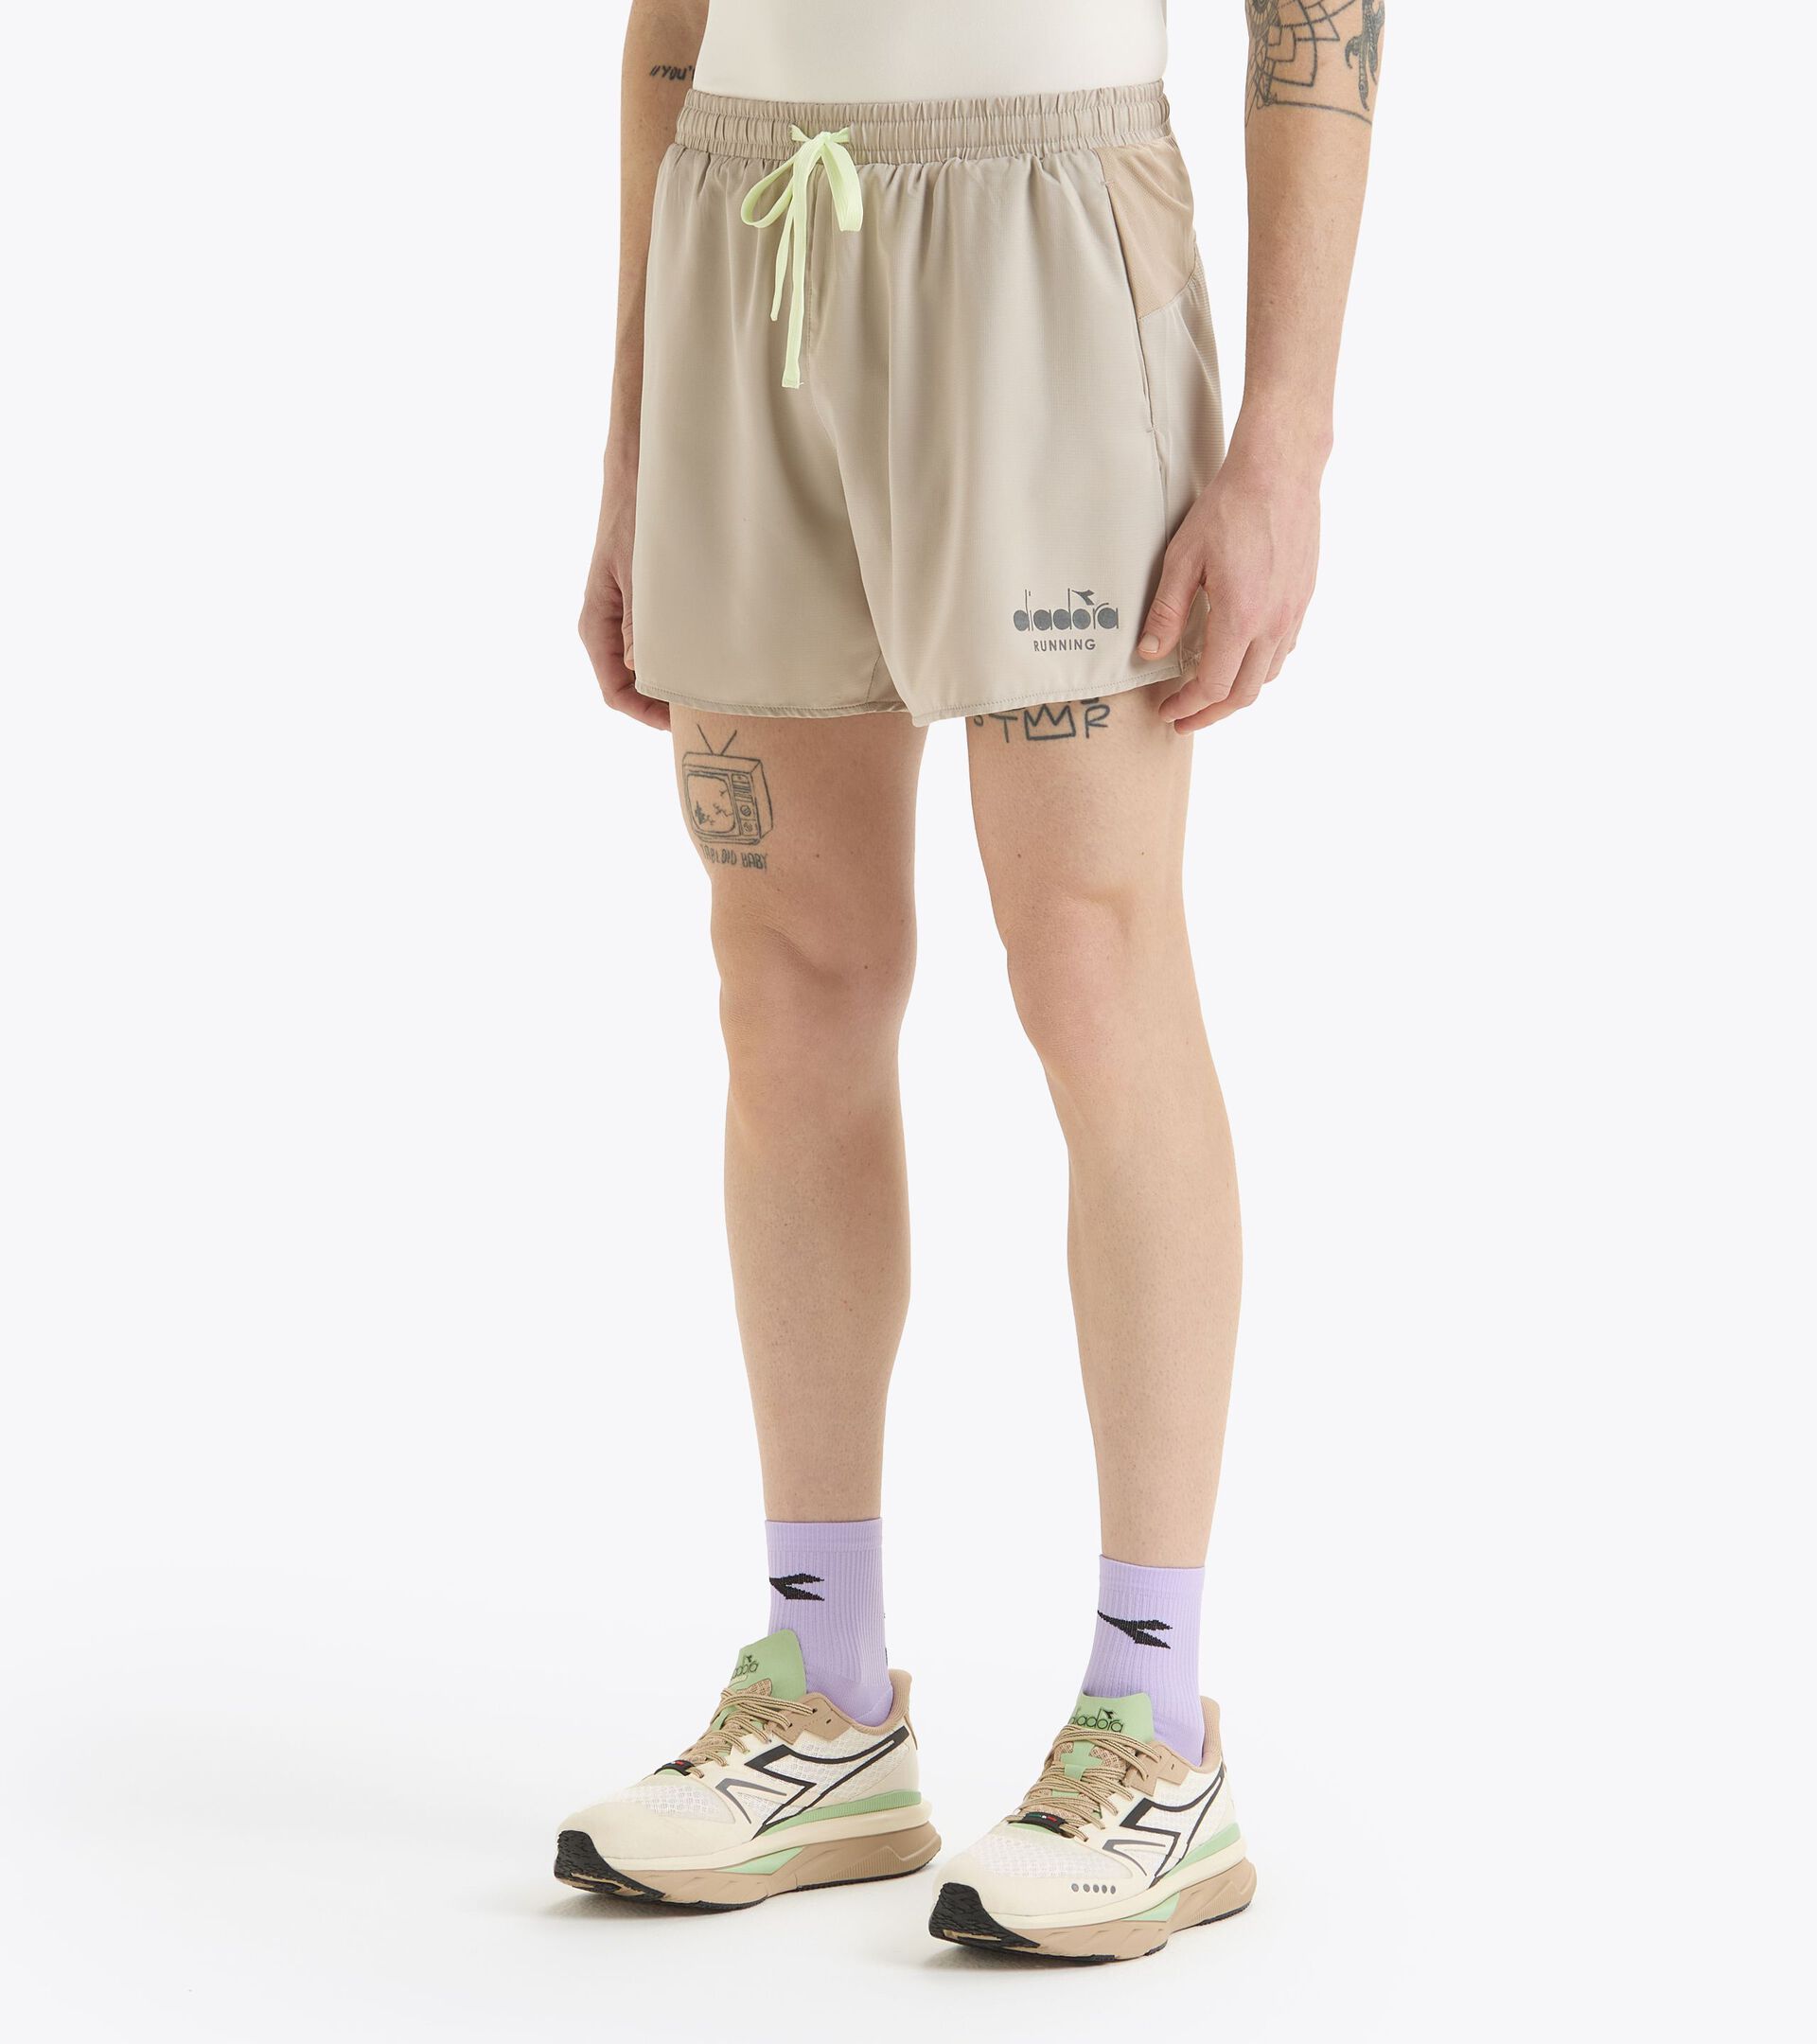 5’’ running shorts - Light fabric - Men’s SHORTS 5'' MILL CITY HUMUS - Diadora